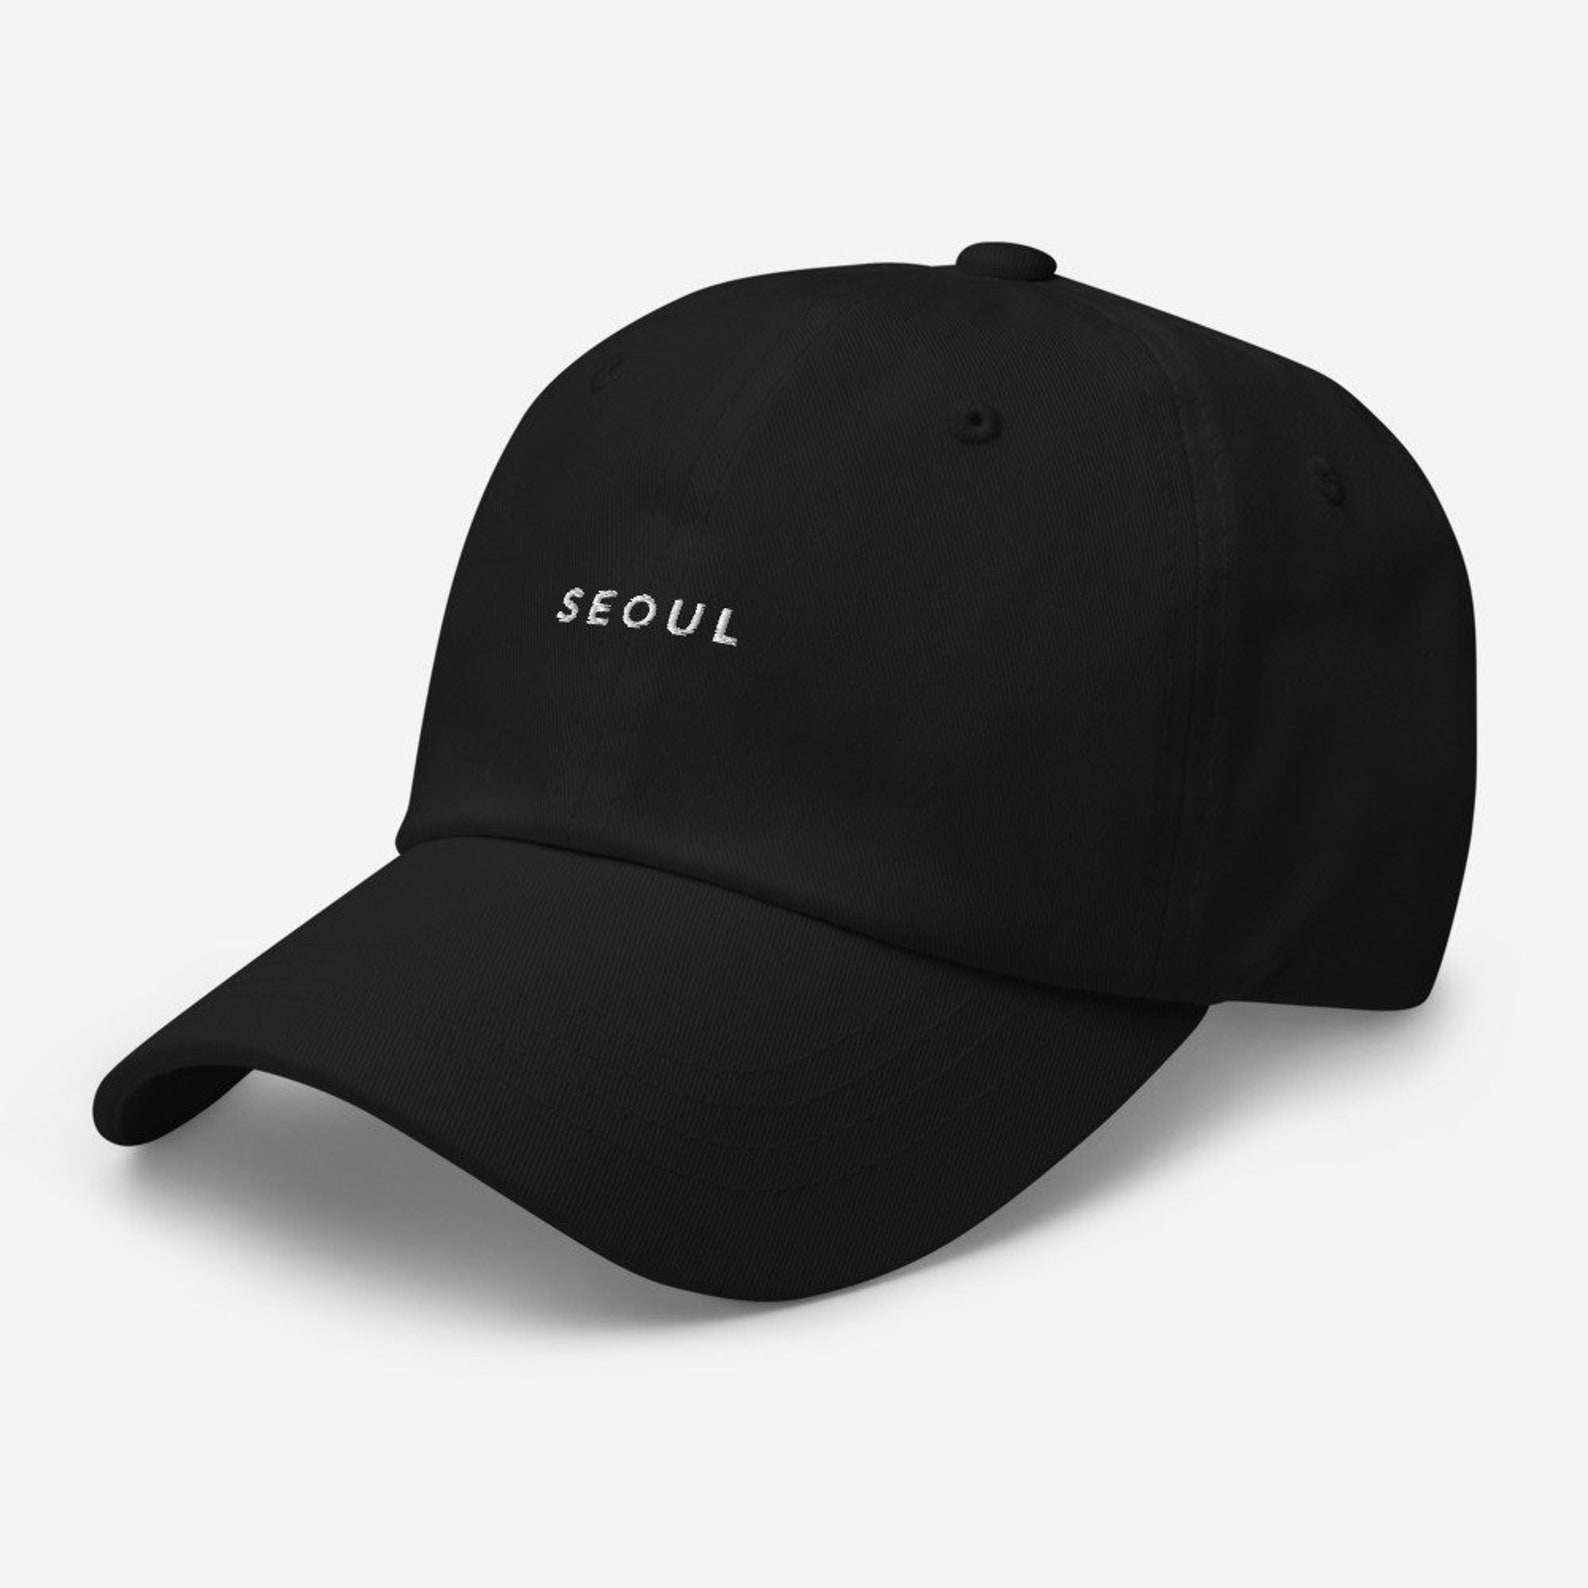 SEOUL Hat Embroidered Black Navy Simple Minimal | Etsy